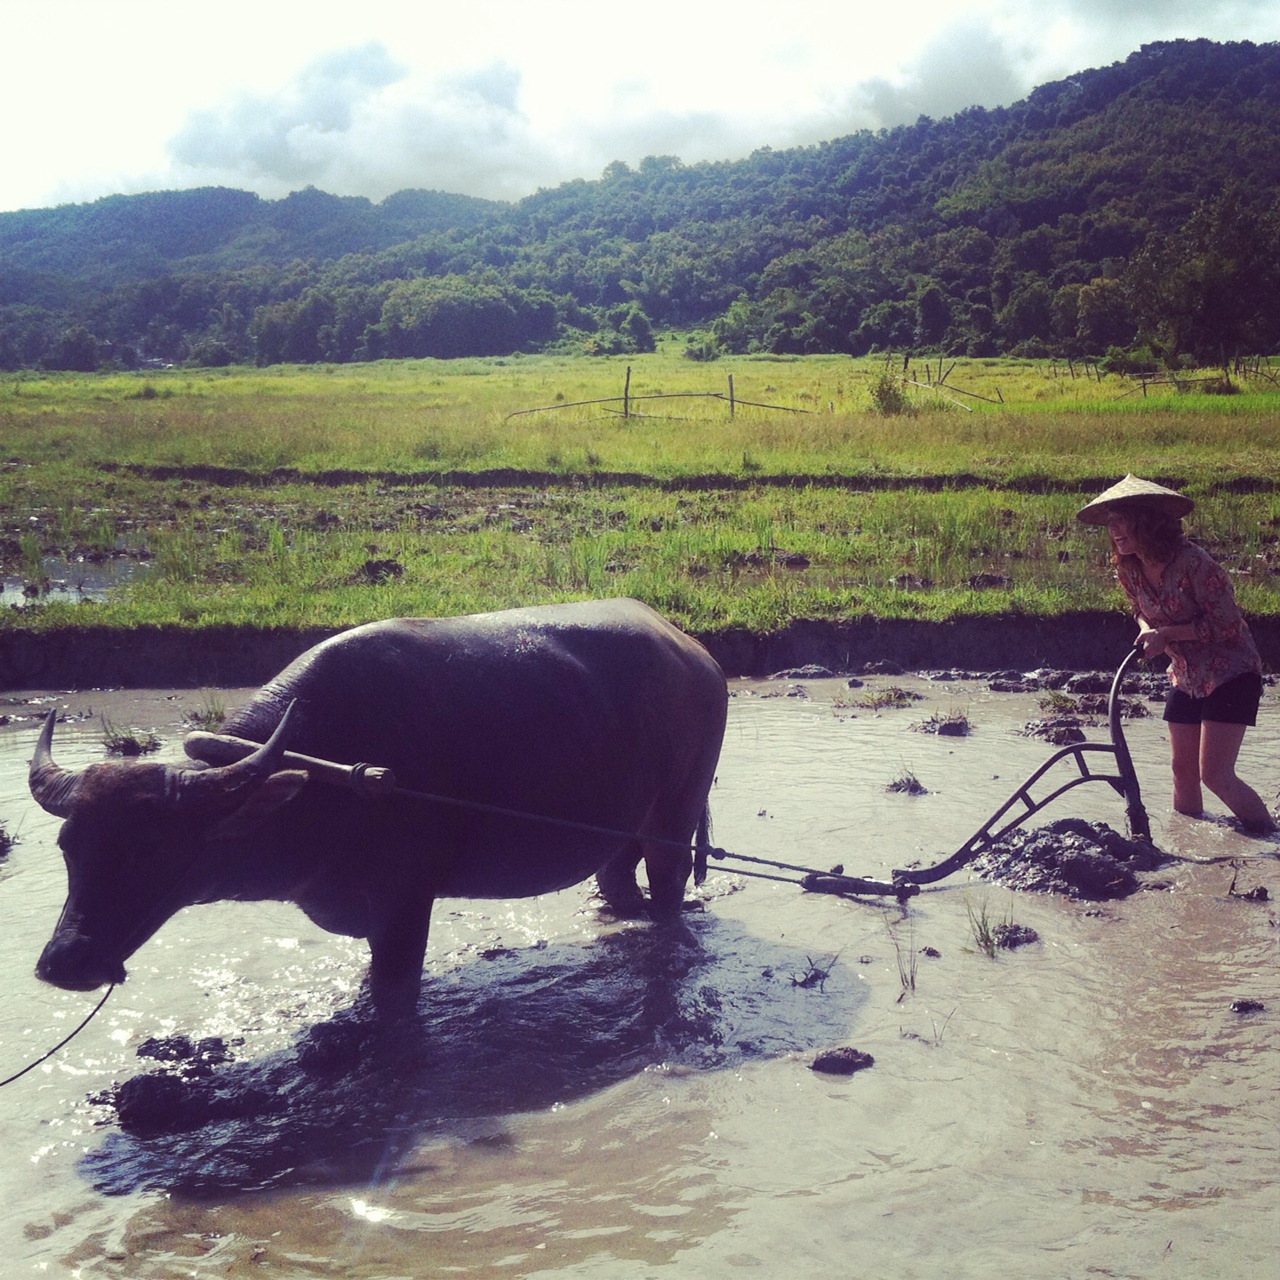 Laos Luang Prabang Living Land Farm Rice is Life